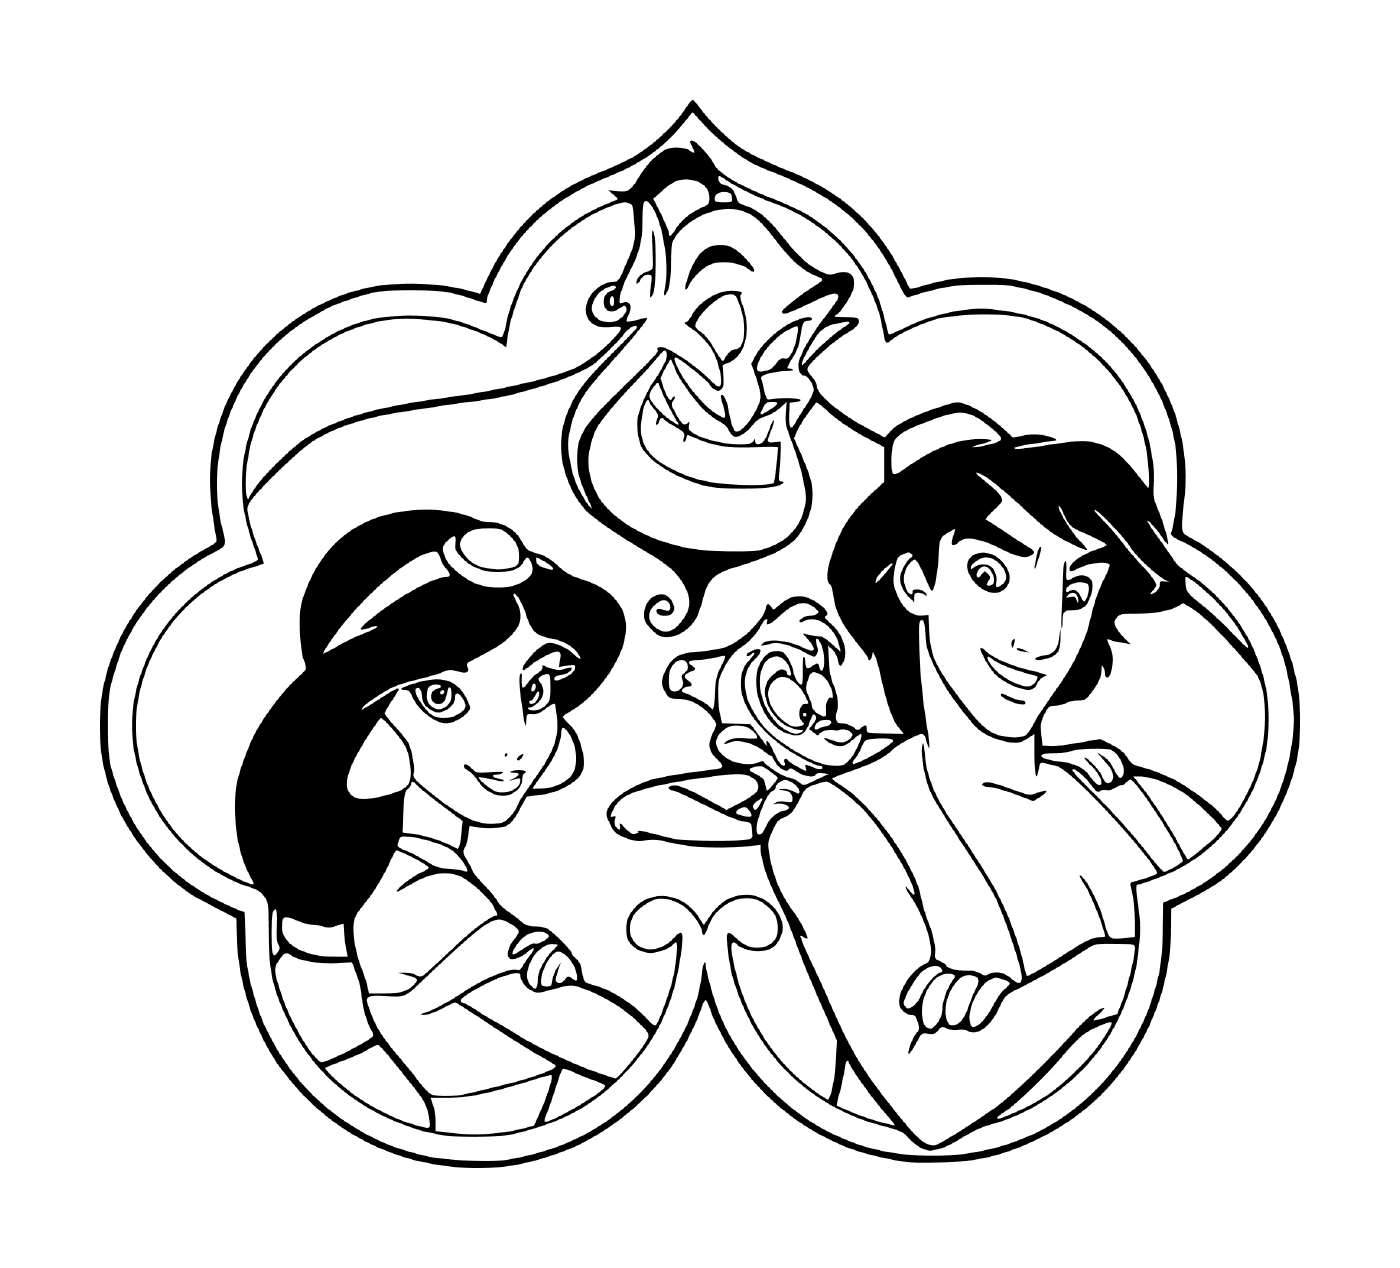  Aladdin, Jasmine and the genius 